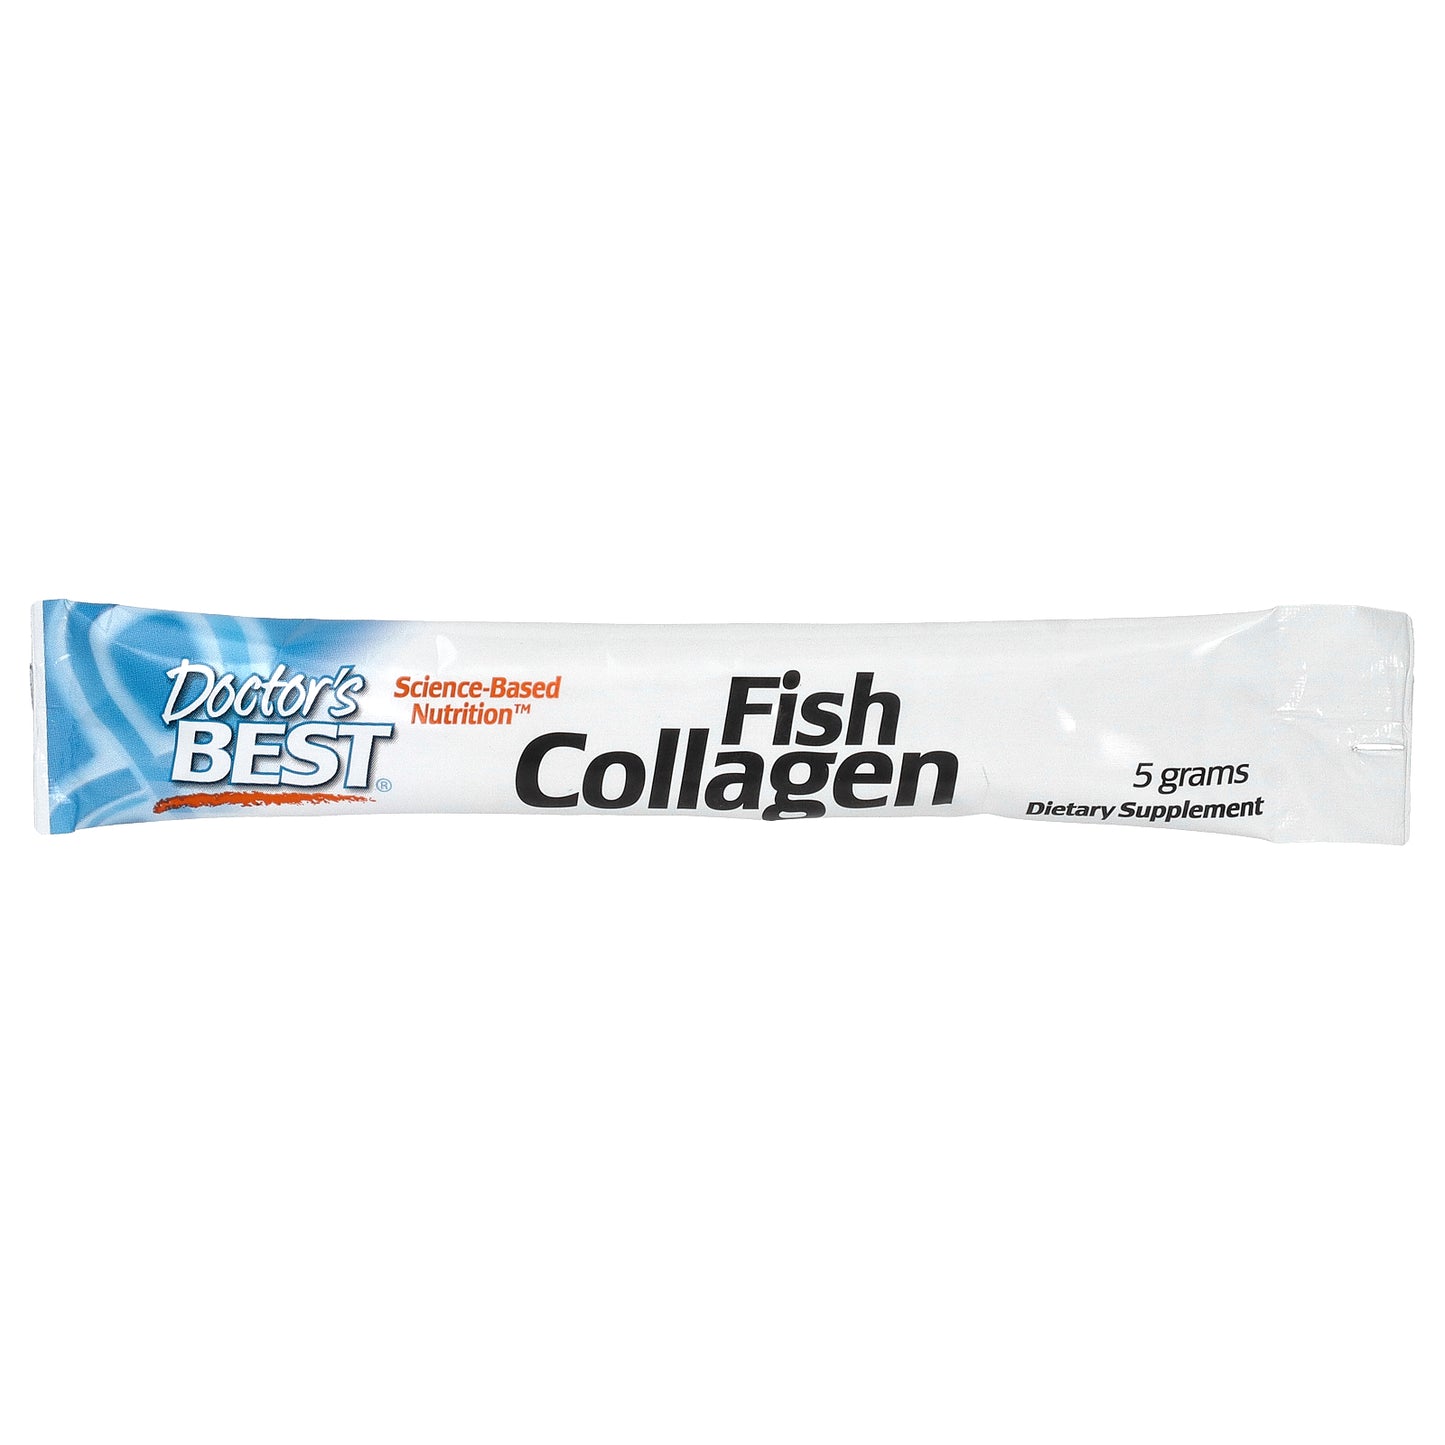 Doctor's Best Fish Collagen with Naticol, 5 g, 30 Powder Stick Packs